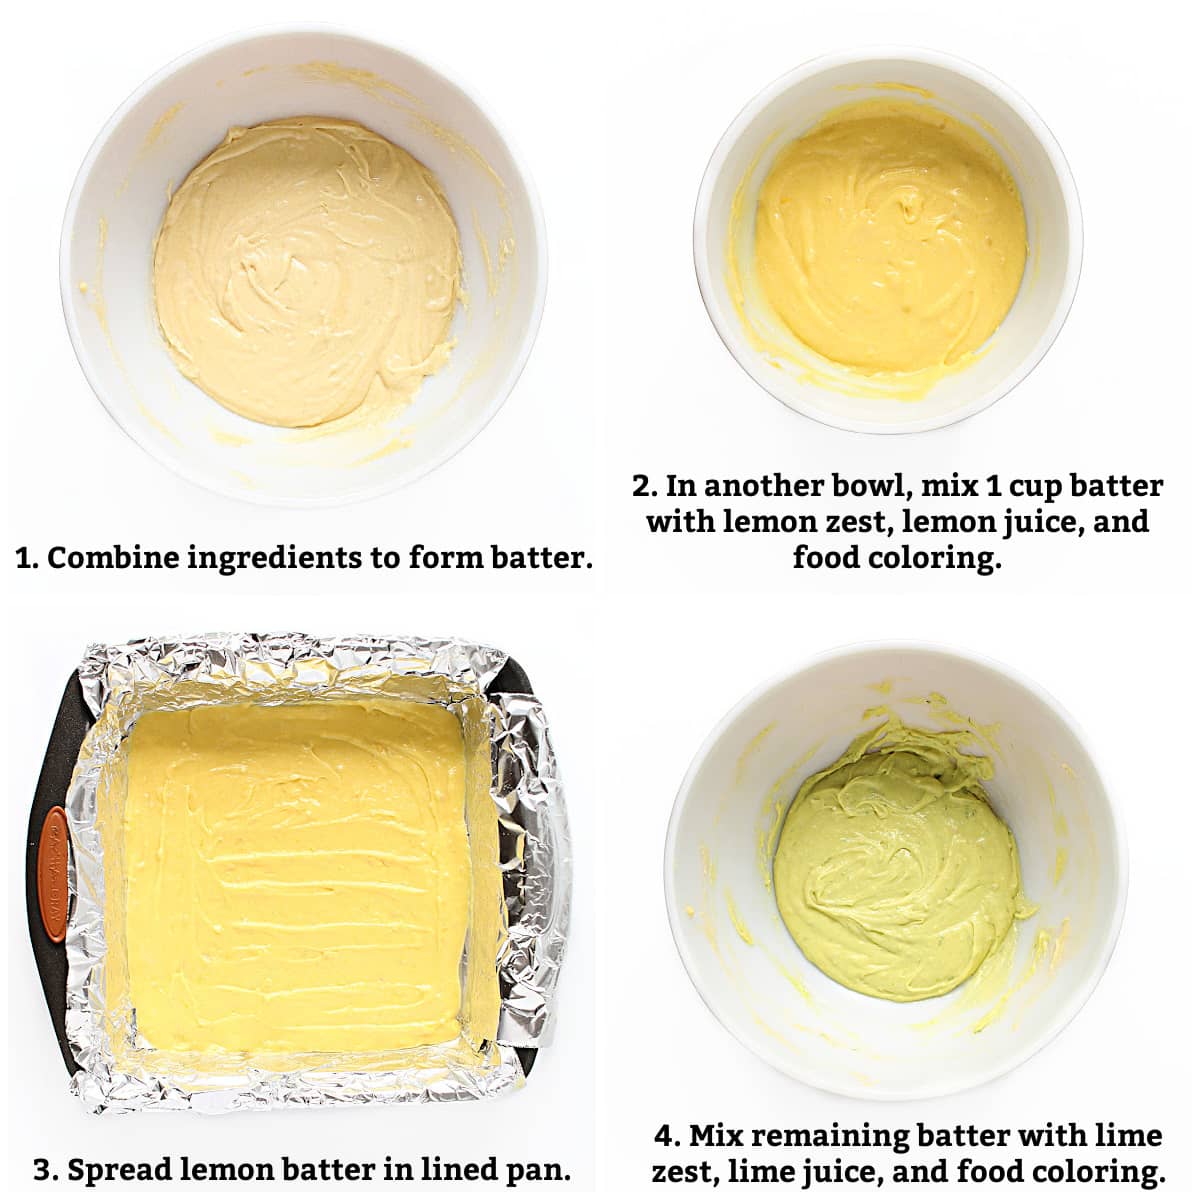 Instructions: combine batter ingredients, add lemon zest/juice to 1 cup batter, spread in pan, add lime zest/juice to remaining batter. 